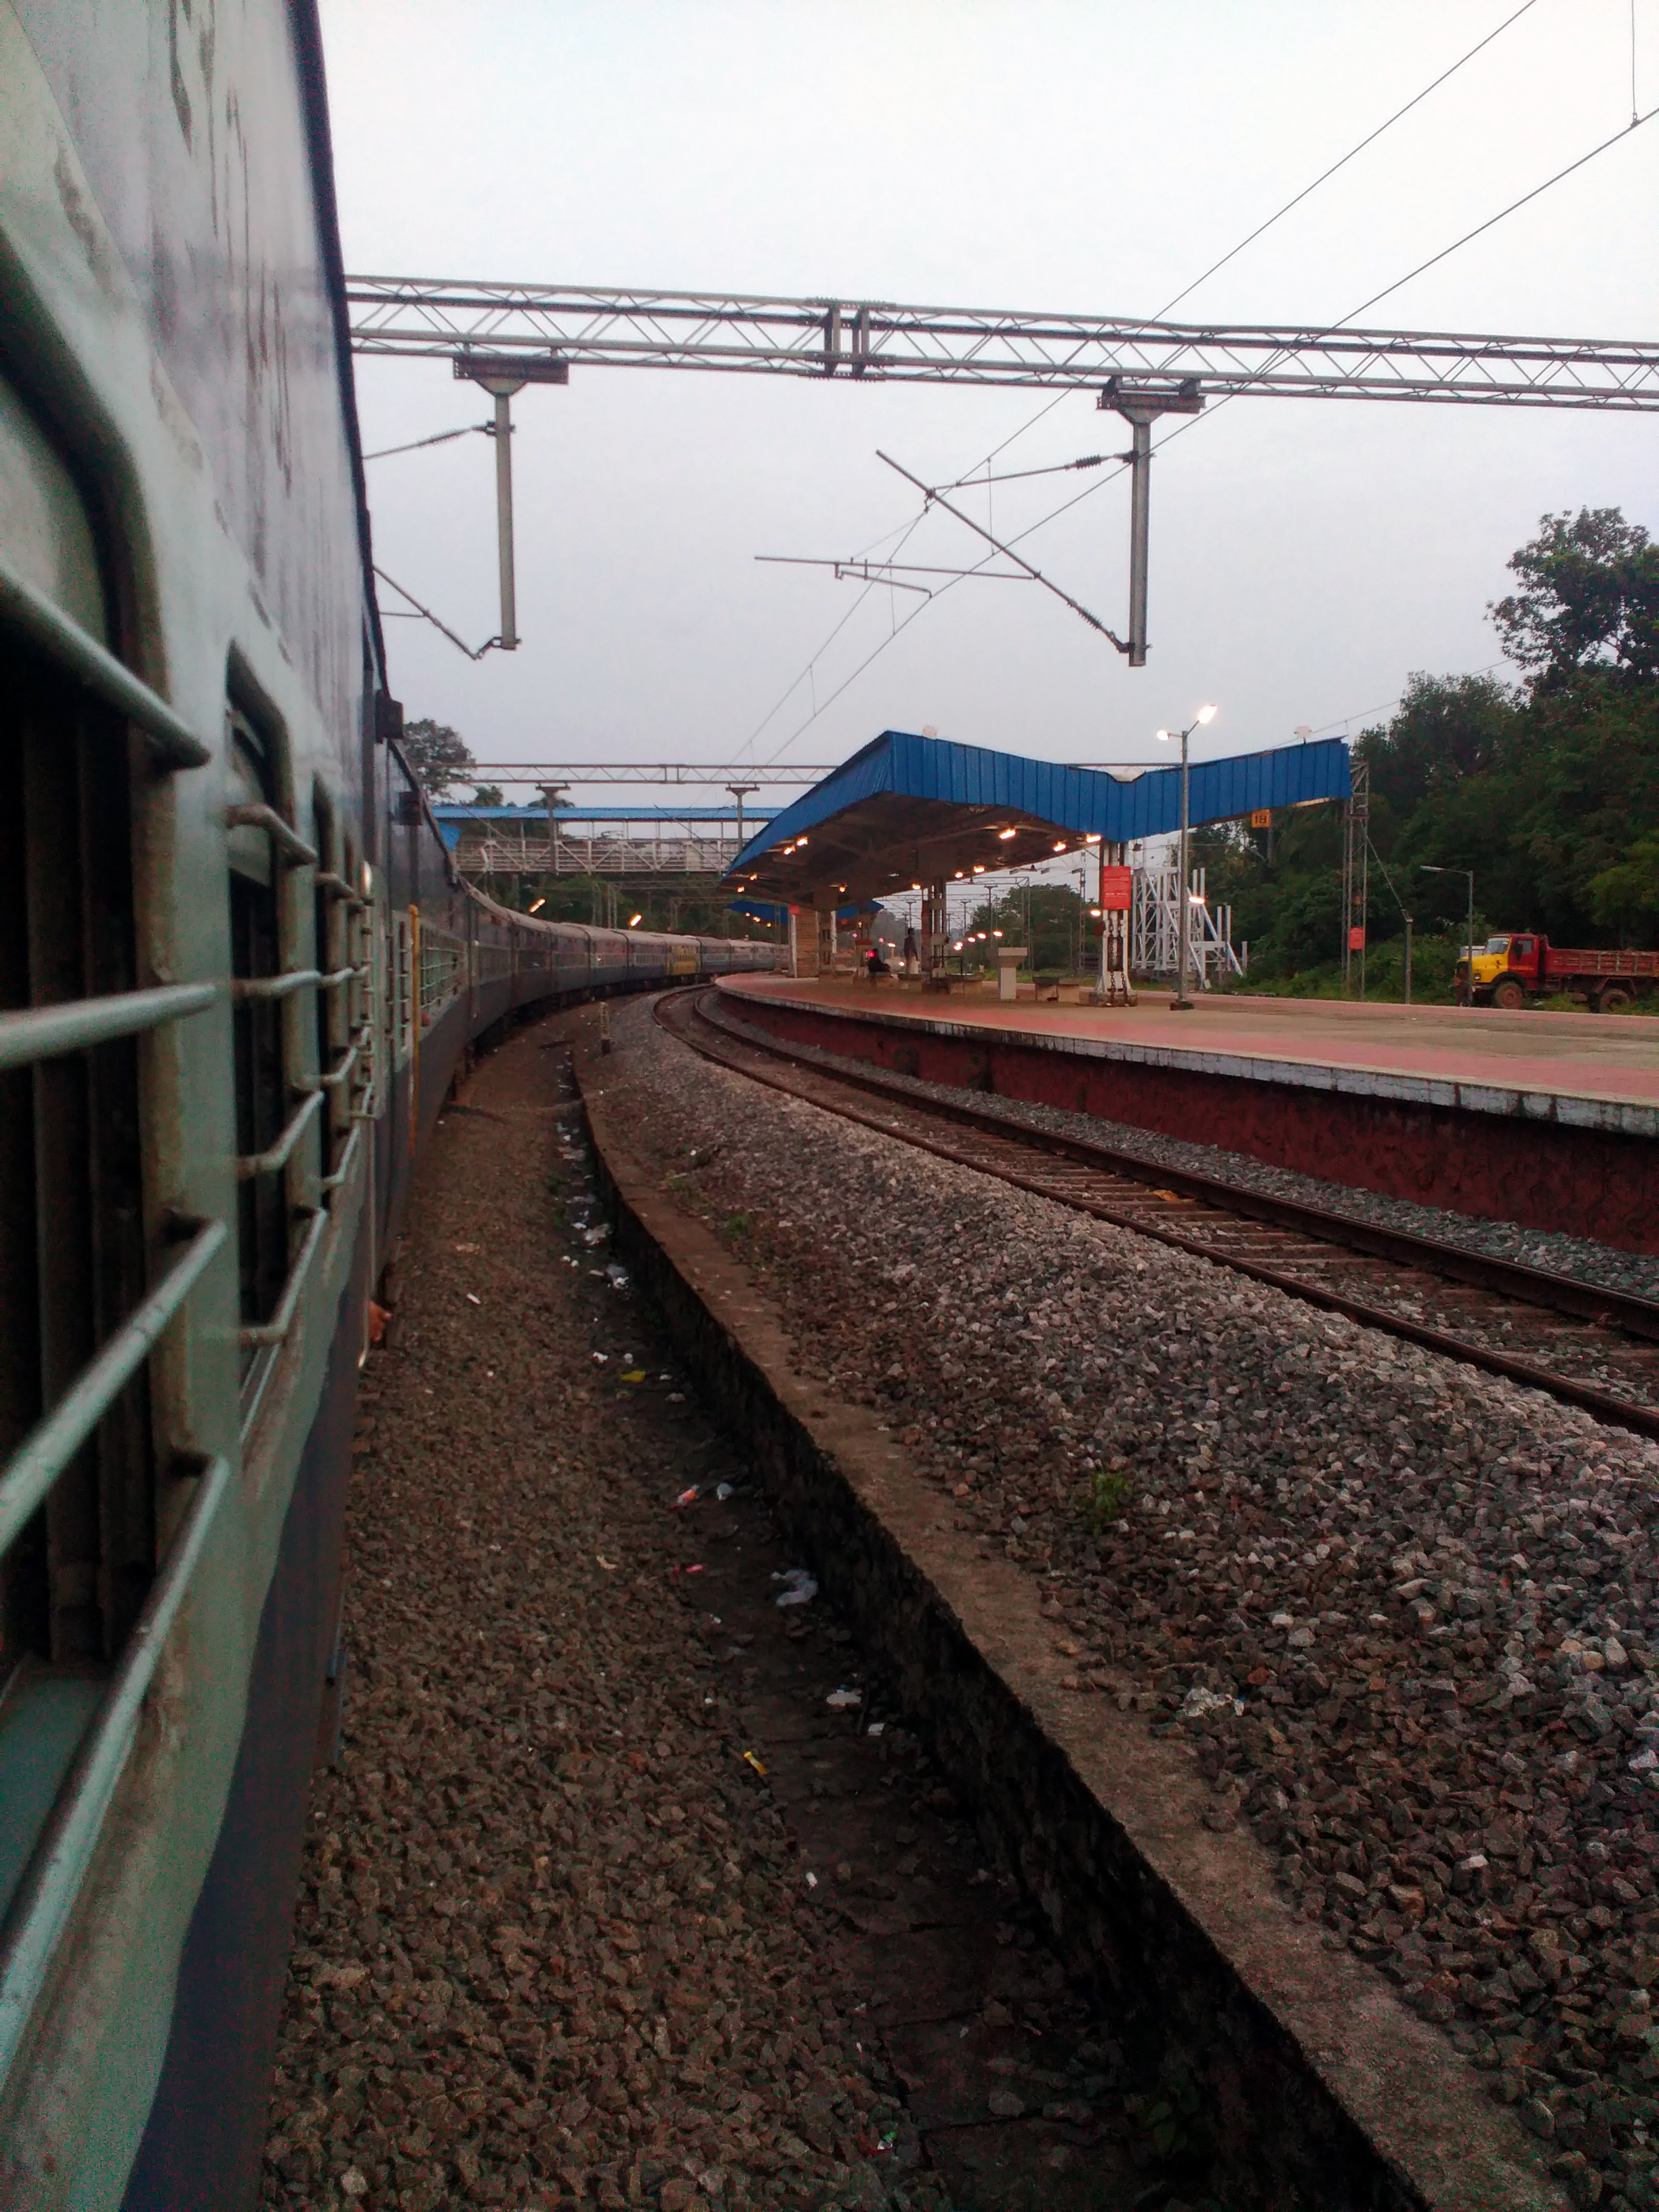 Evening Railway View, Wallpaper, Steel, View, Transportation, HQ Photo